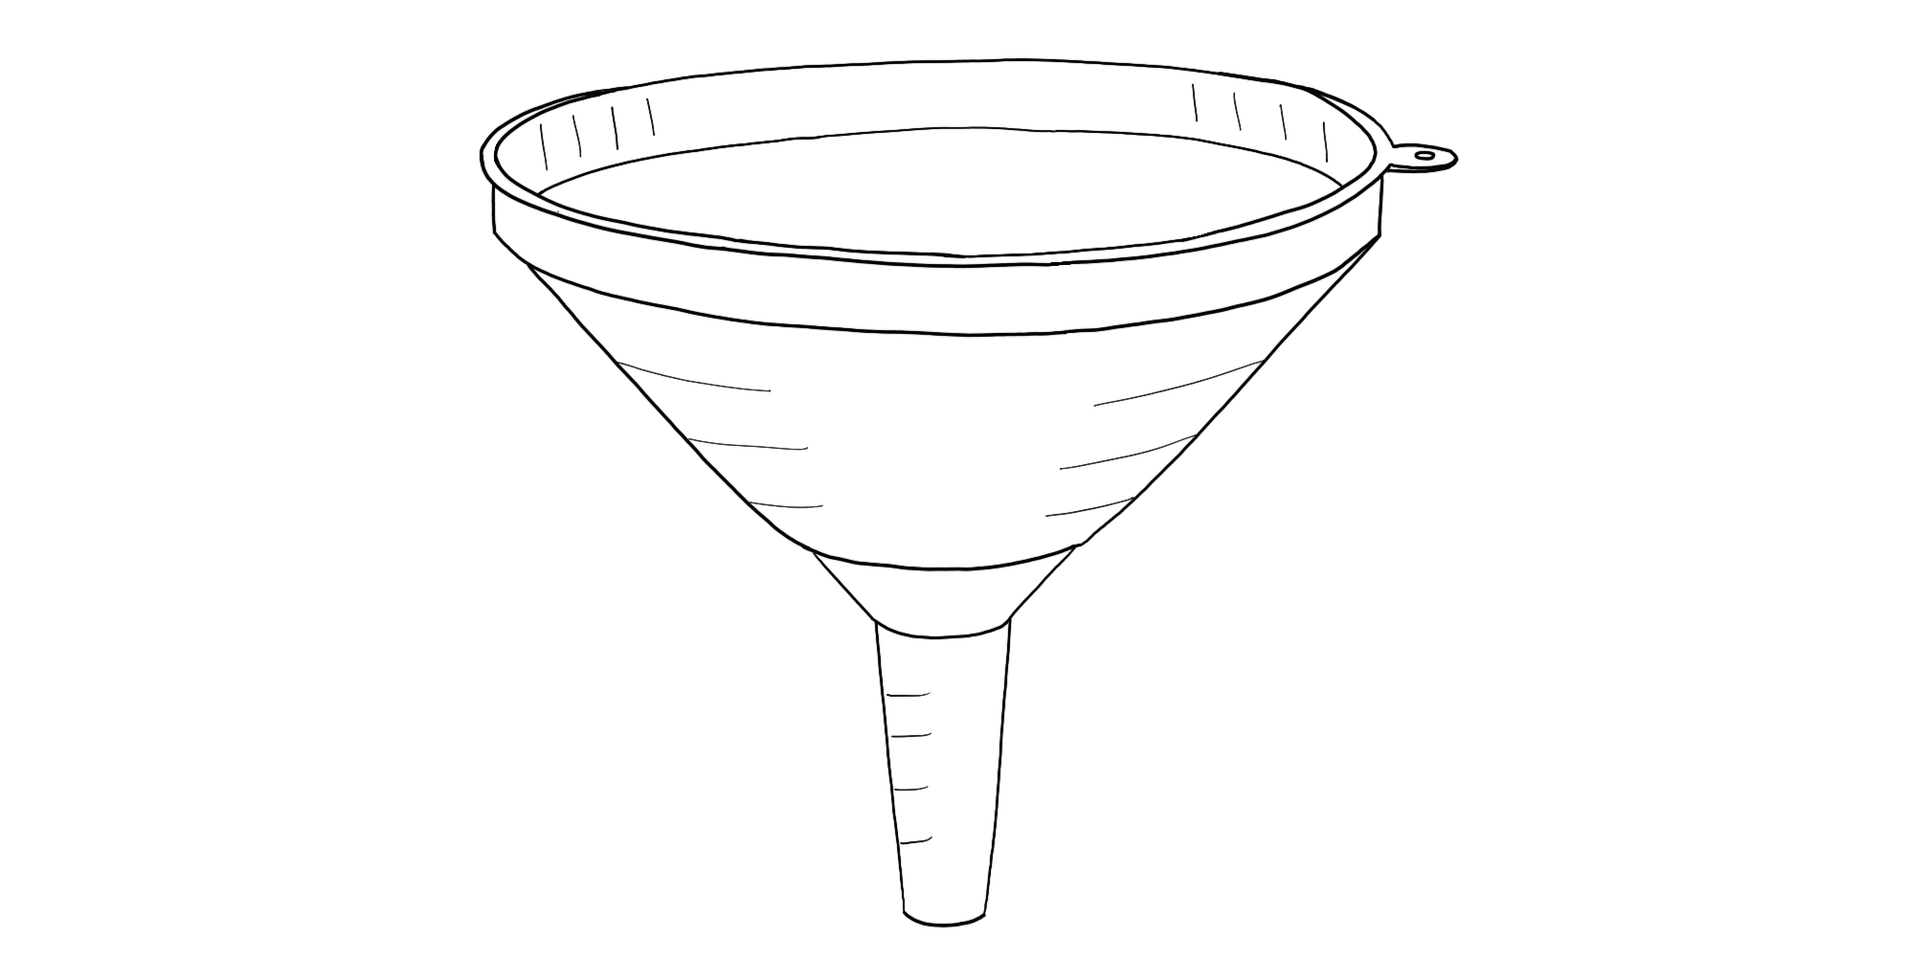  Illustration of a funnel